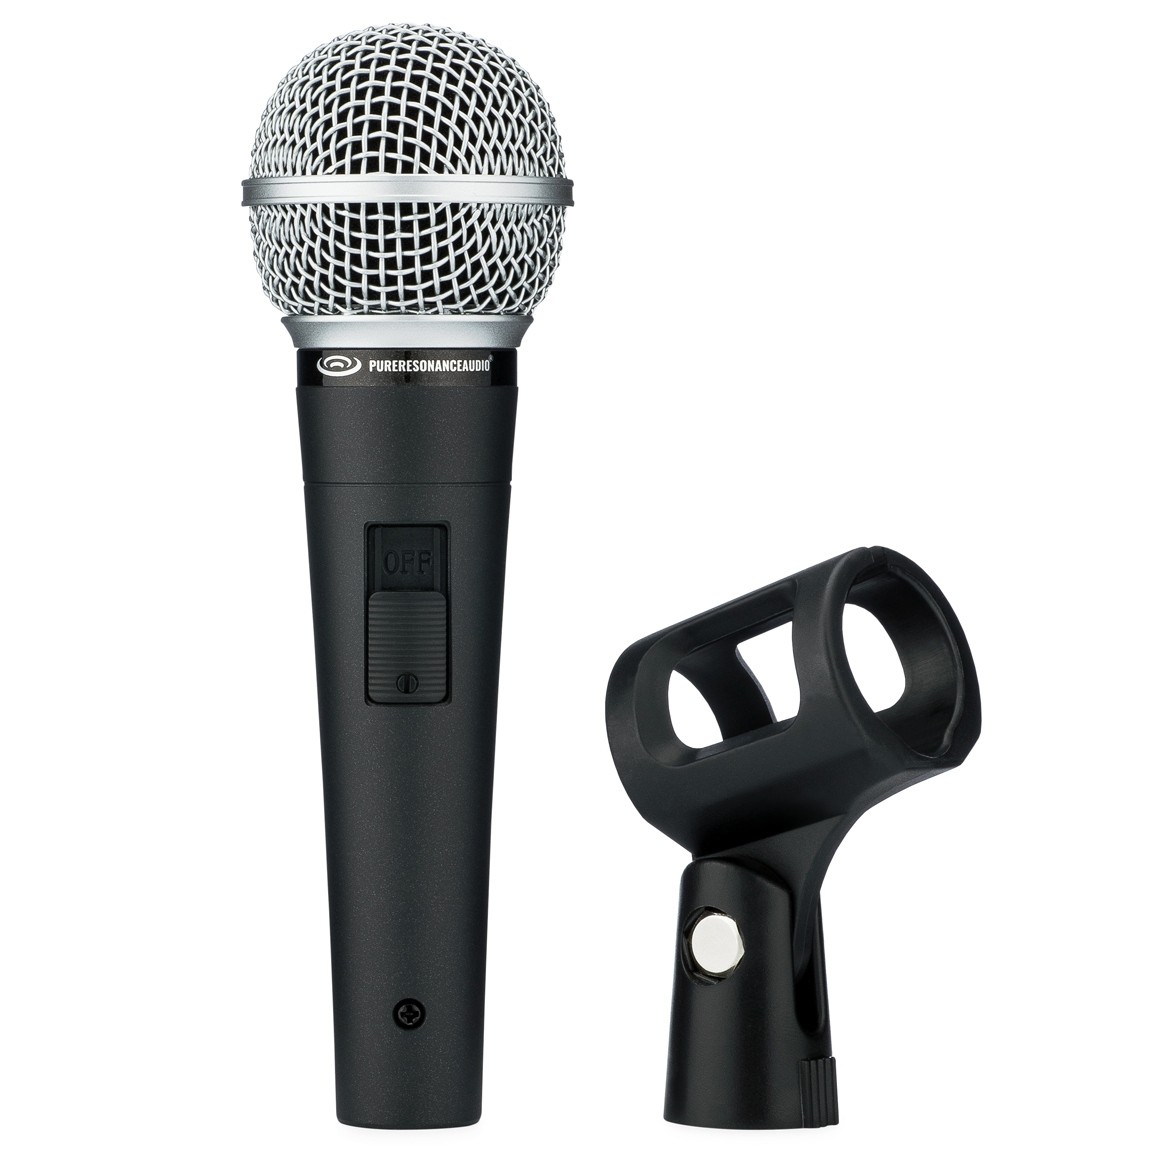 Pure Resonance Audio UC1S Vocal Microphone